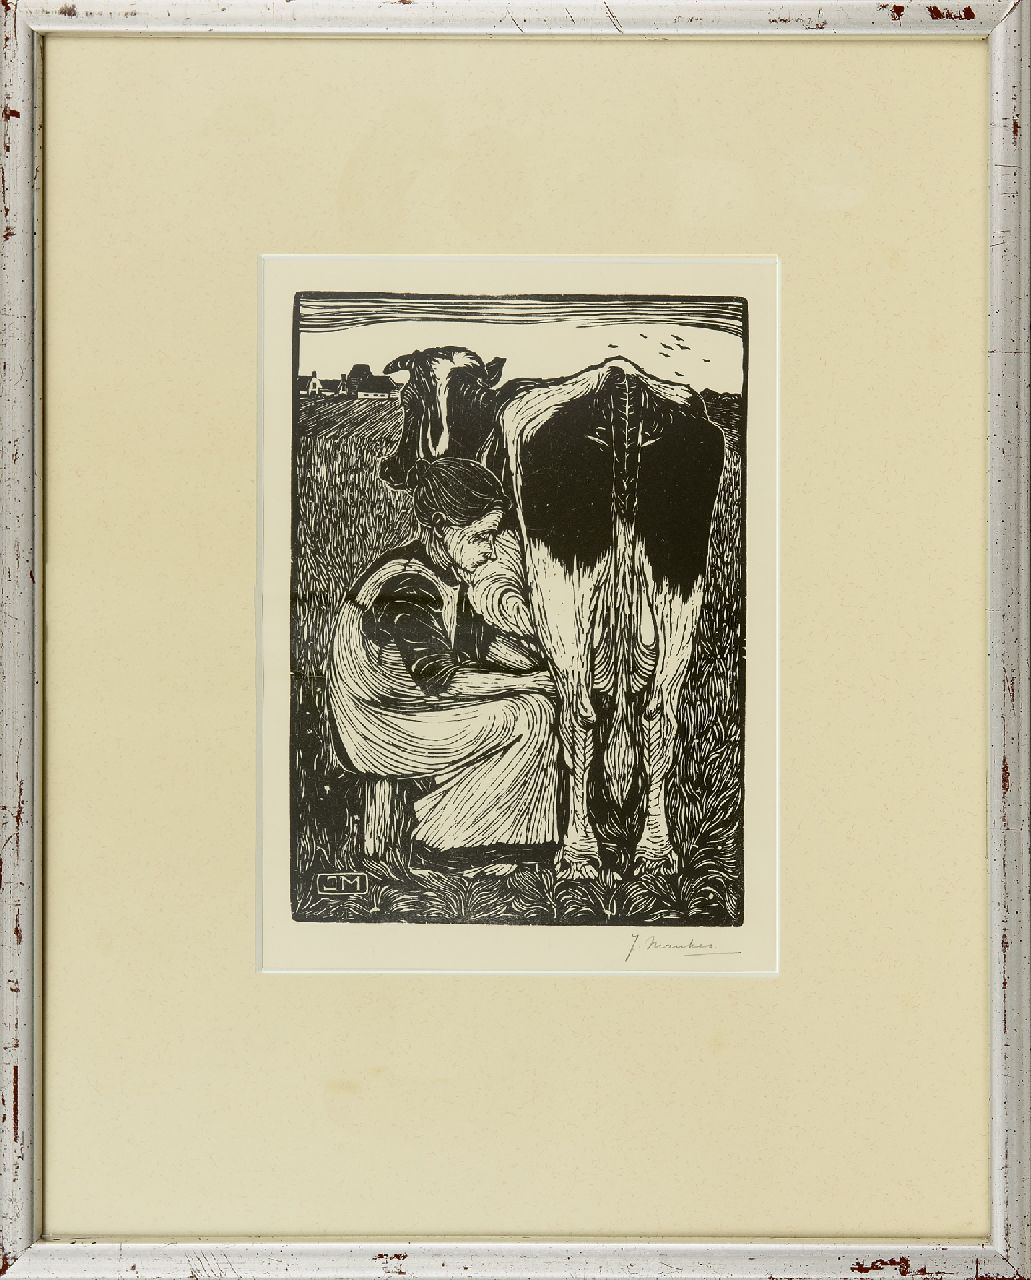 Mankes J.  | Jan Mankes | Grafiek te koop aangeboden | Koemelkende boerin, houtsnede op papier 22,0 x 16,0 cm, gesigneerd rechtsonder